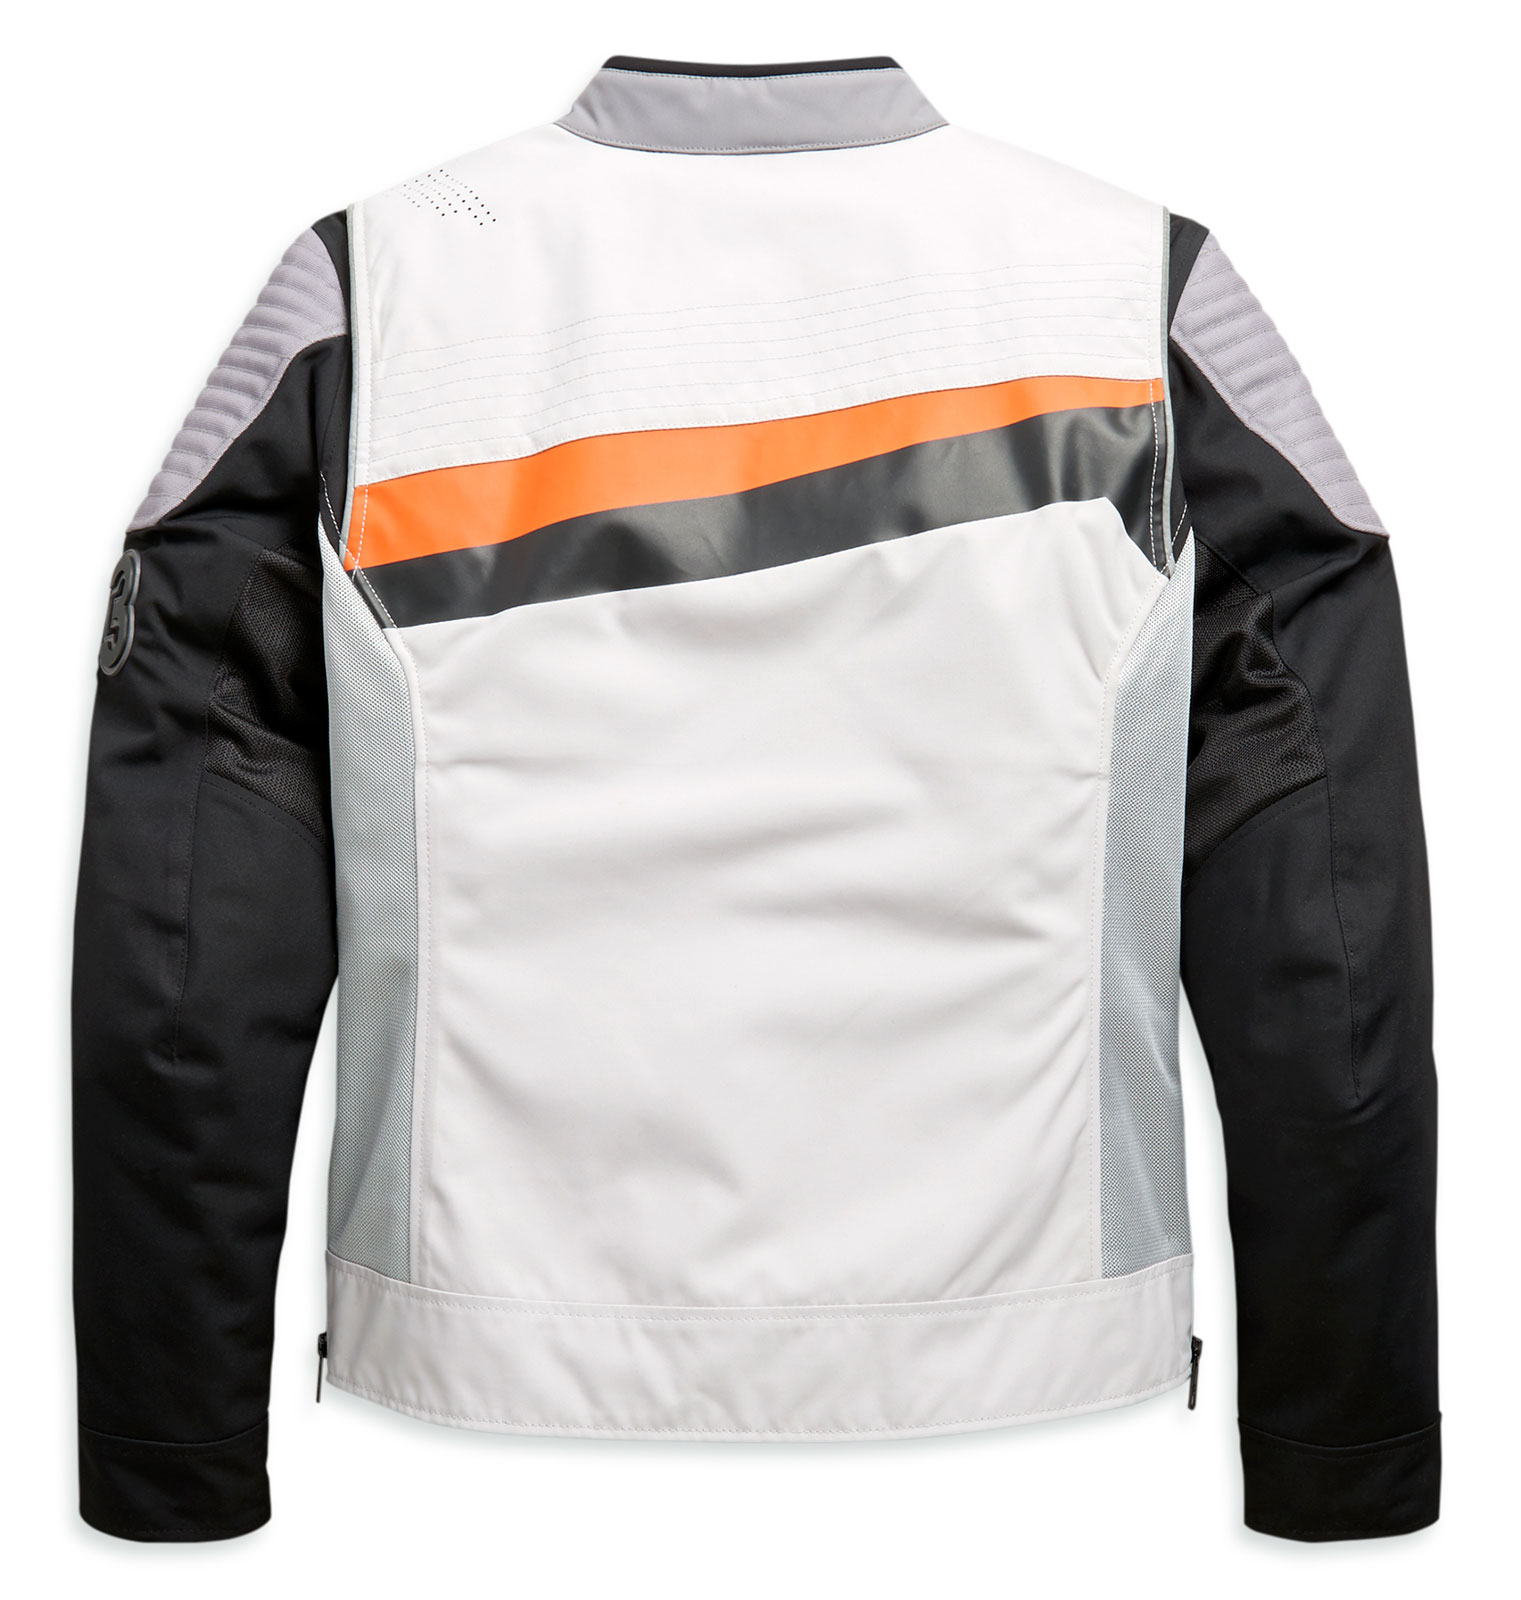 98155 20em Harley Davidson Mesh Textile Riding Jacket Sidari At Thunderbike Shop